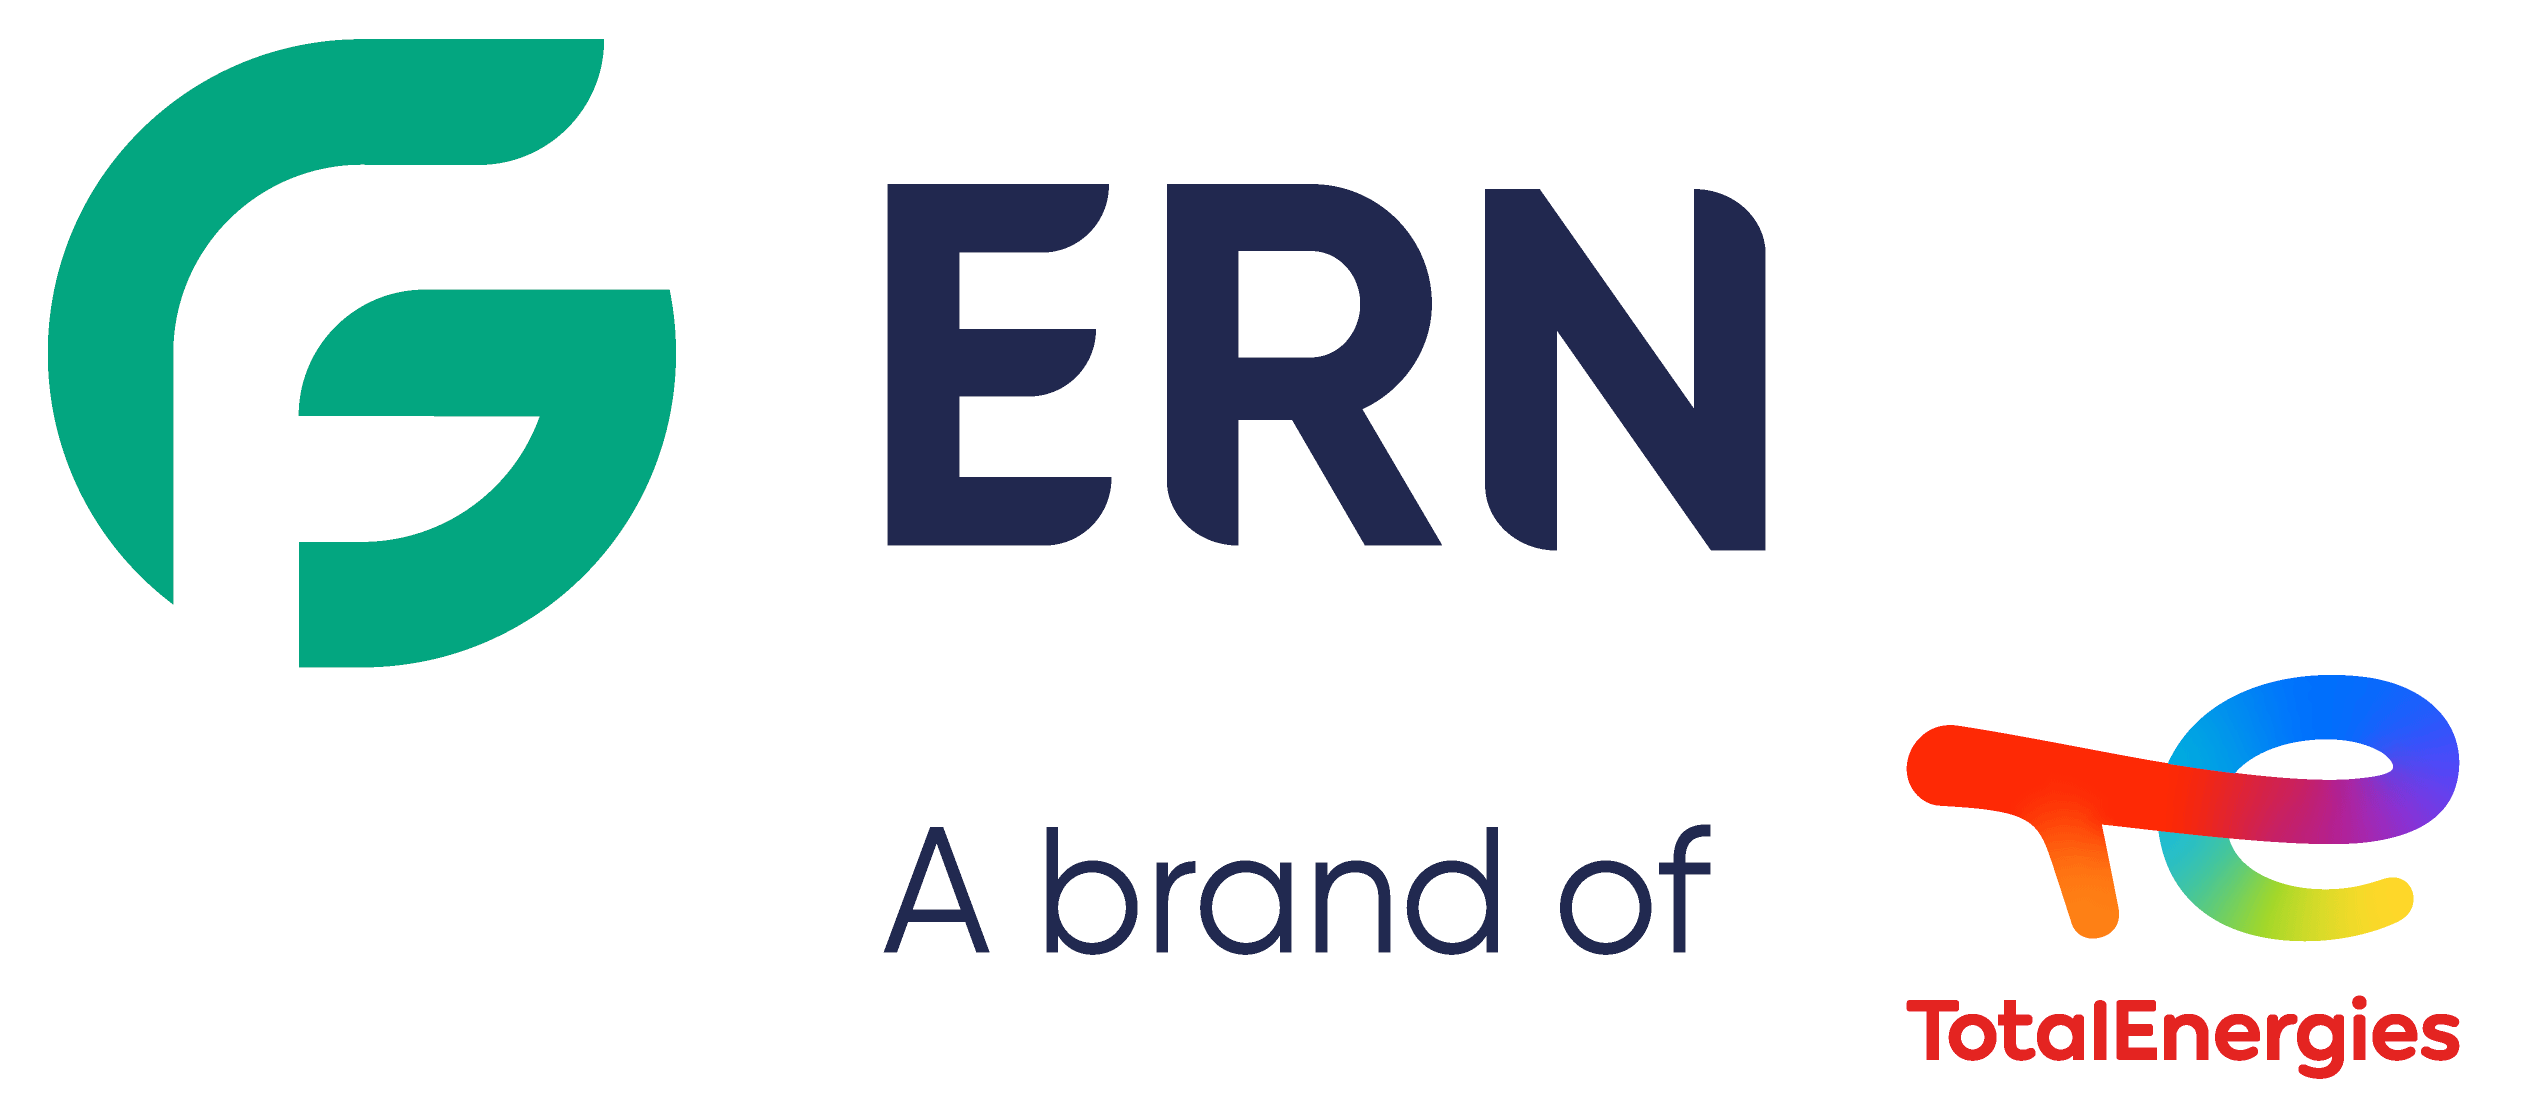 Logo ERN Energie